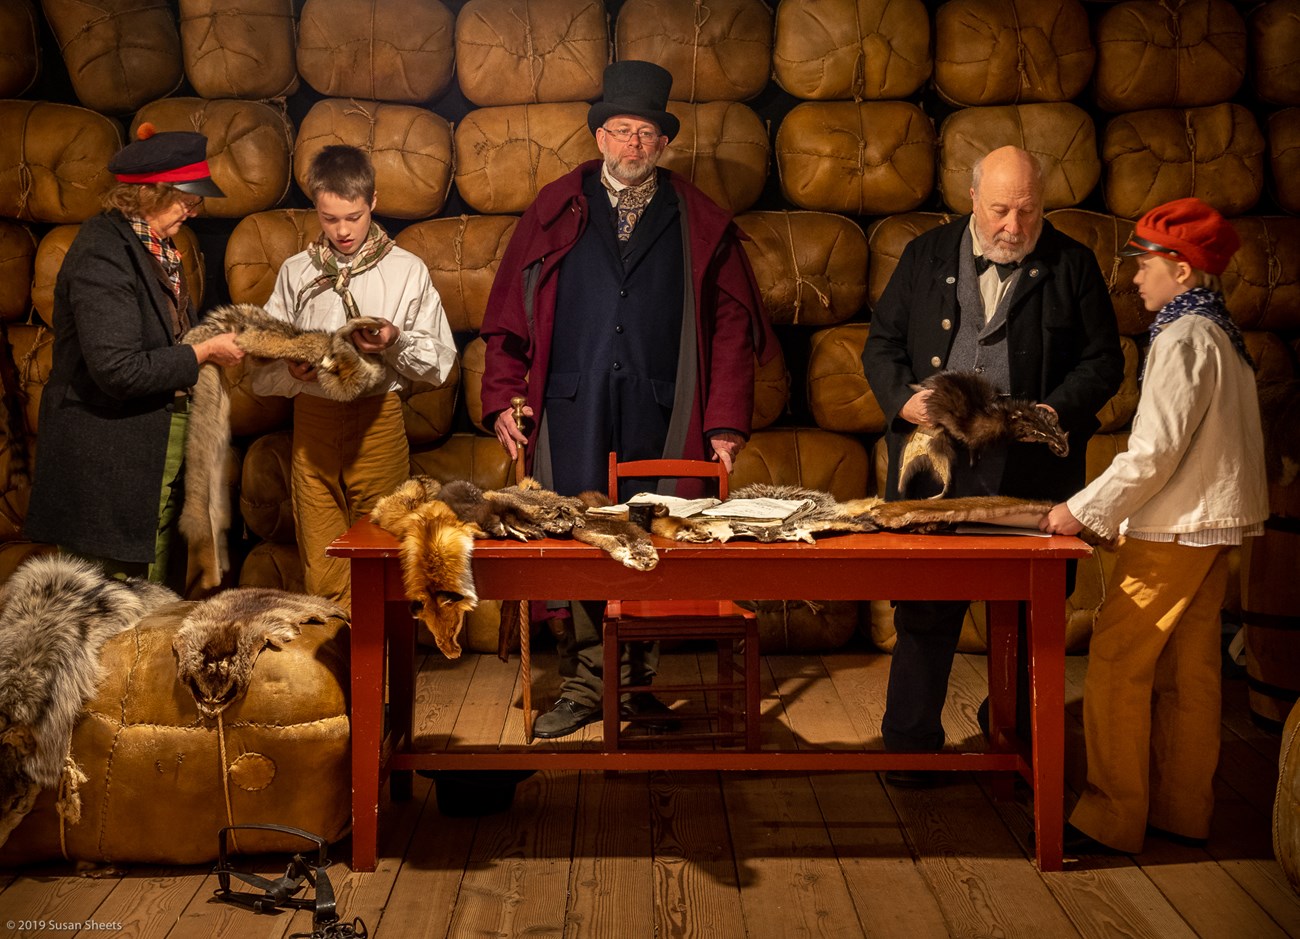 Six reenactors dressed in period clothing examine furs